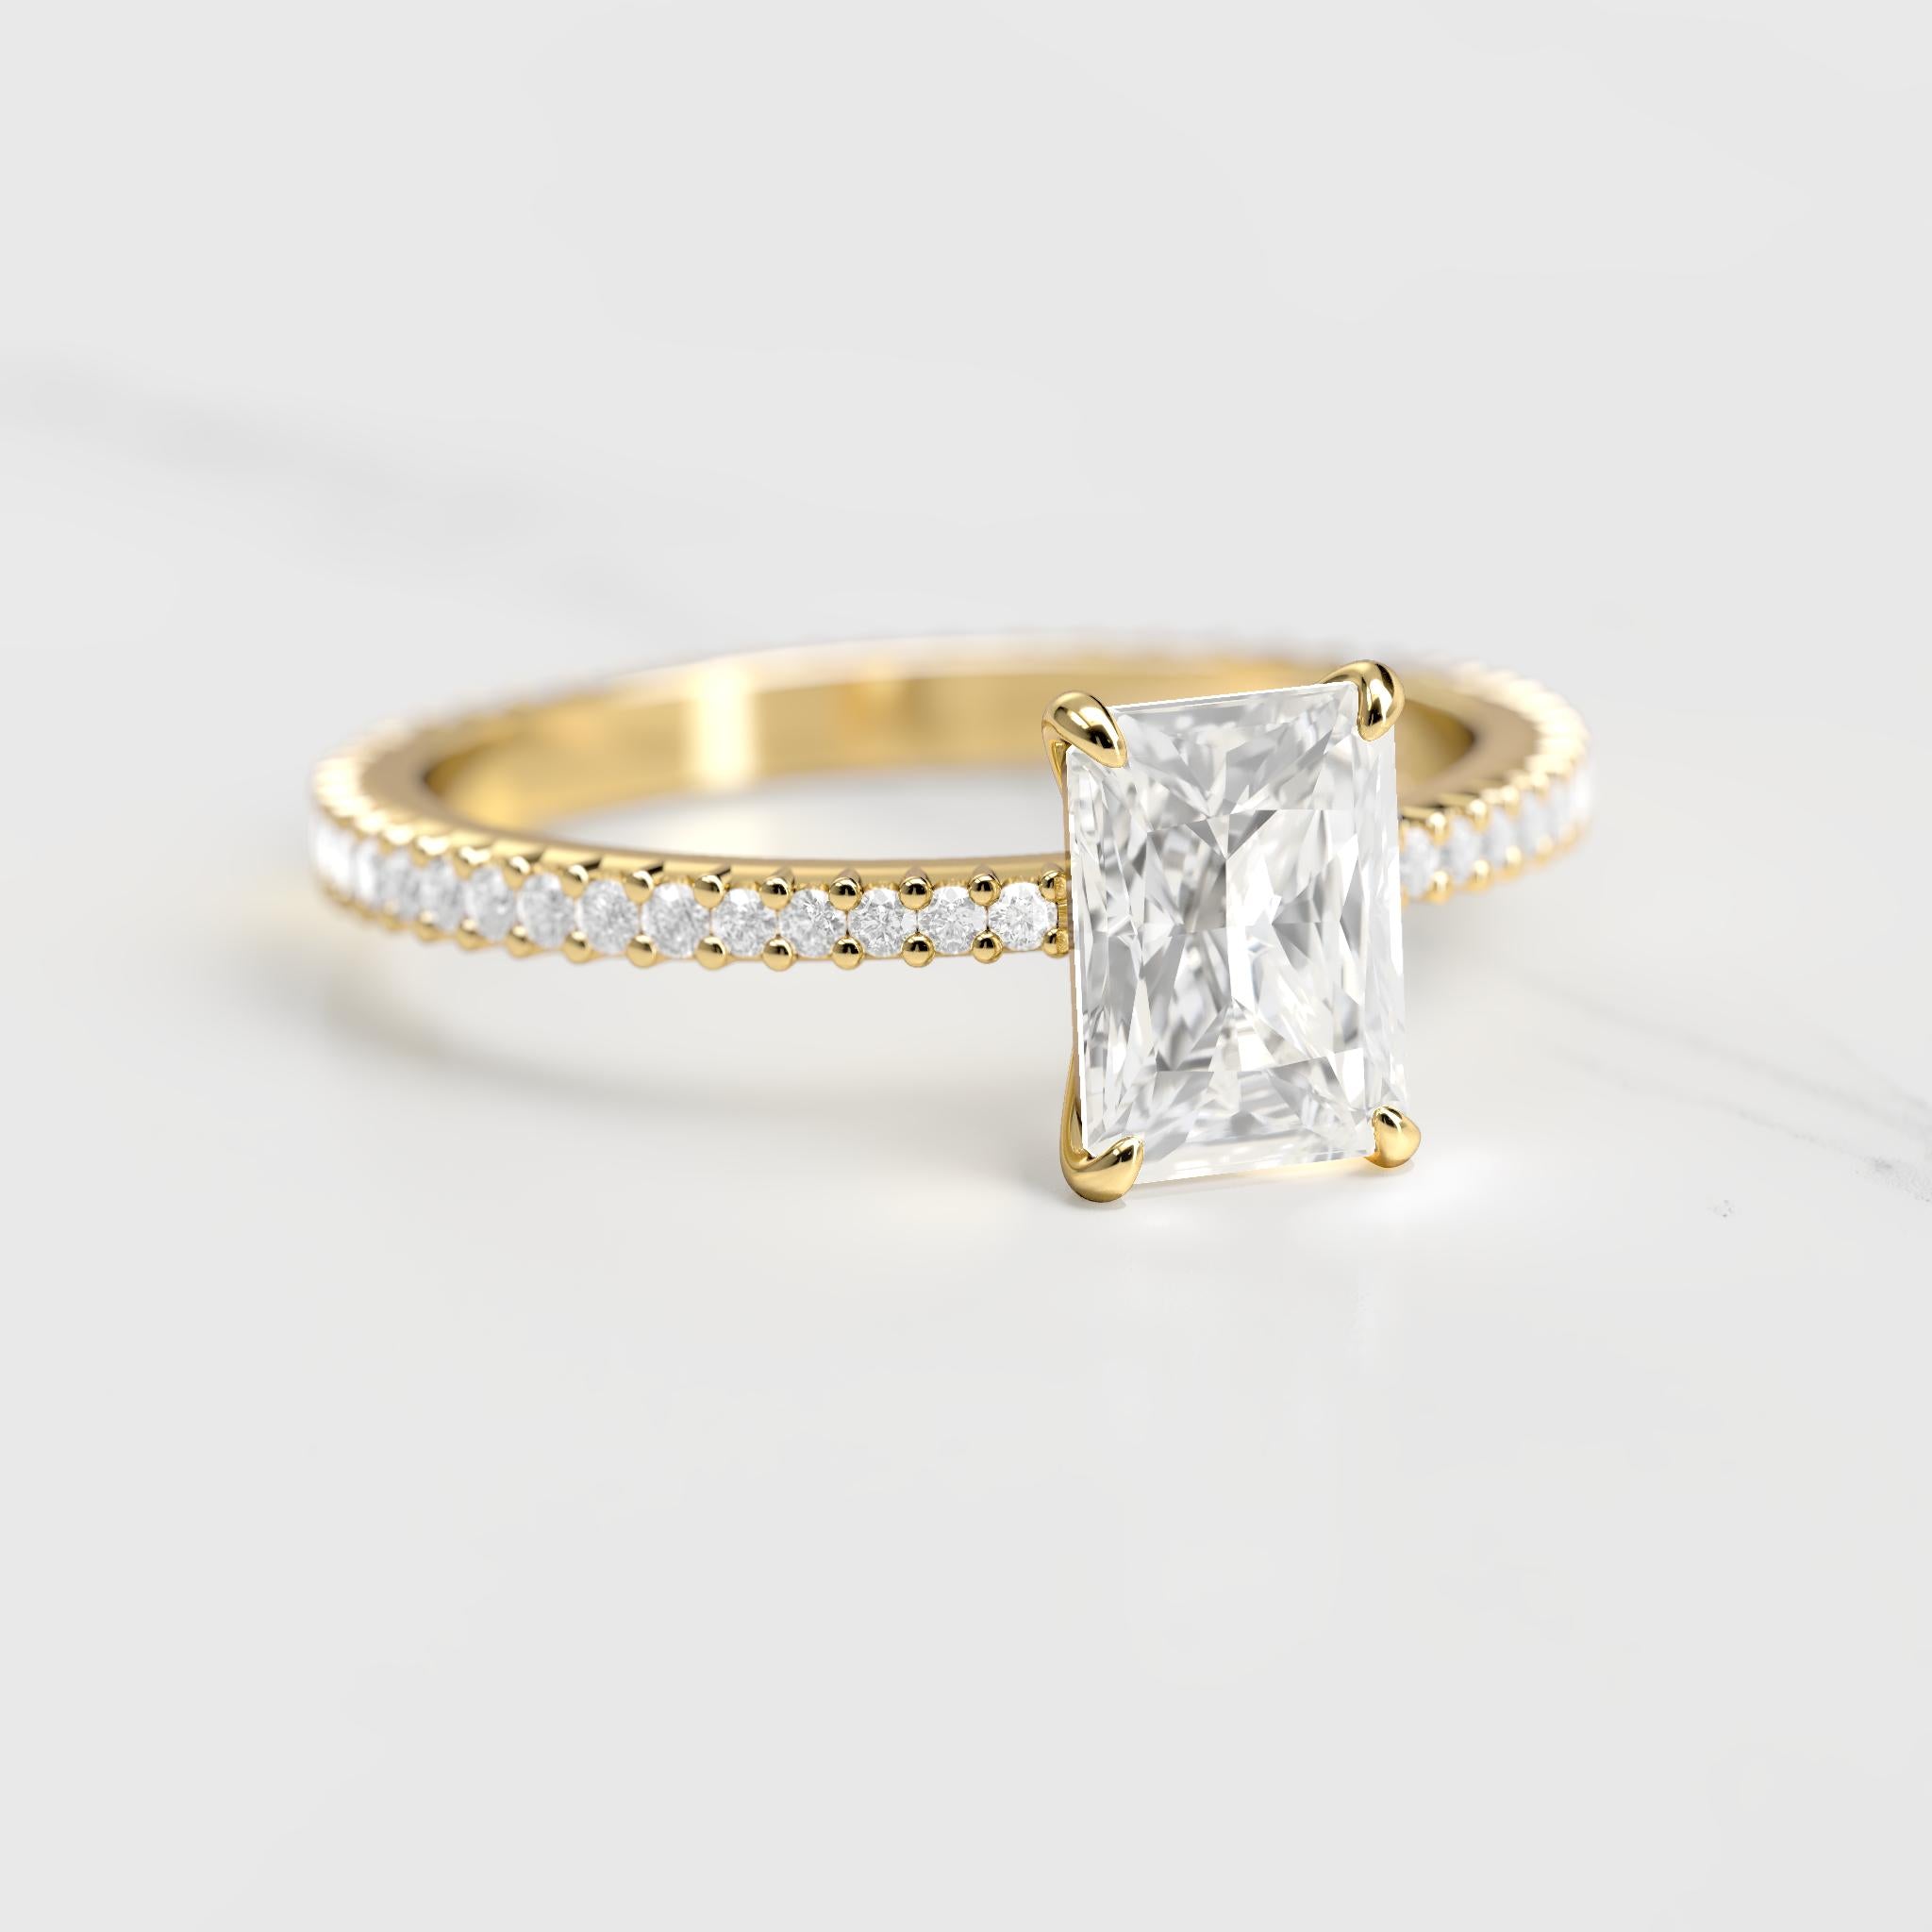 RADIANT FULL PAVE TAPERED DIAMOND RING - 14k white gold / 0.5ct / natural diamond